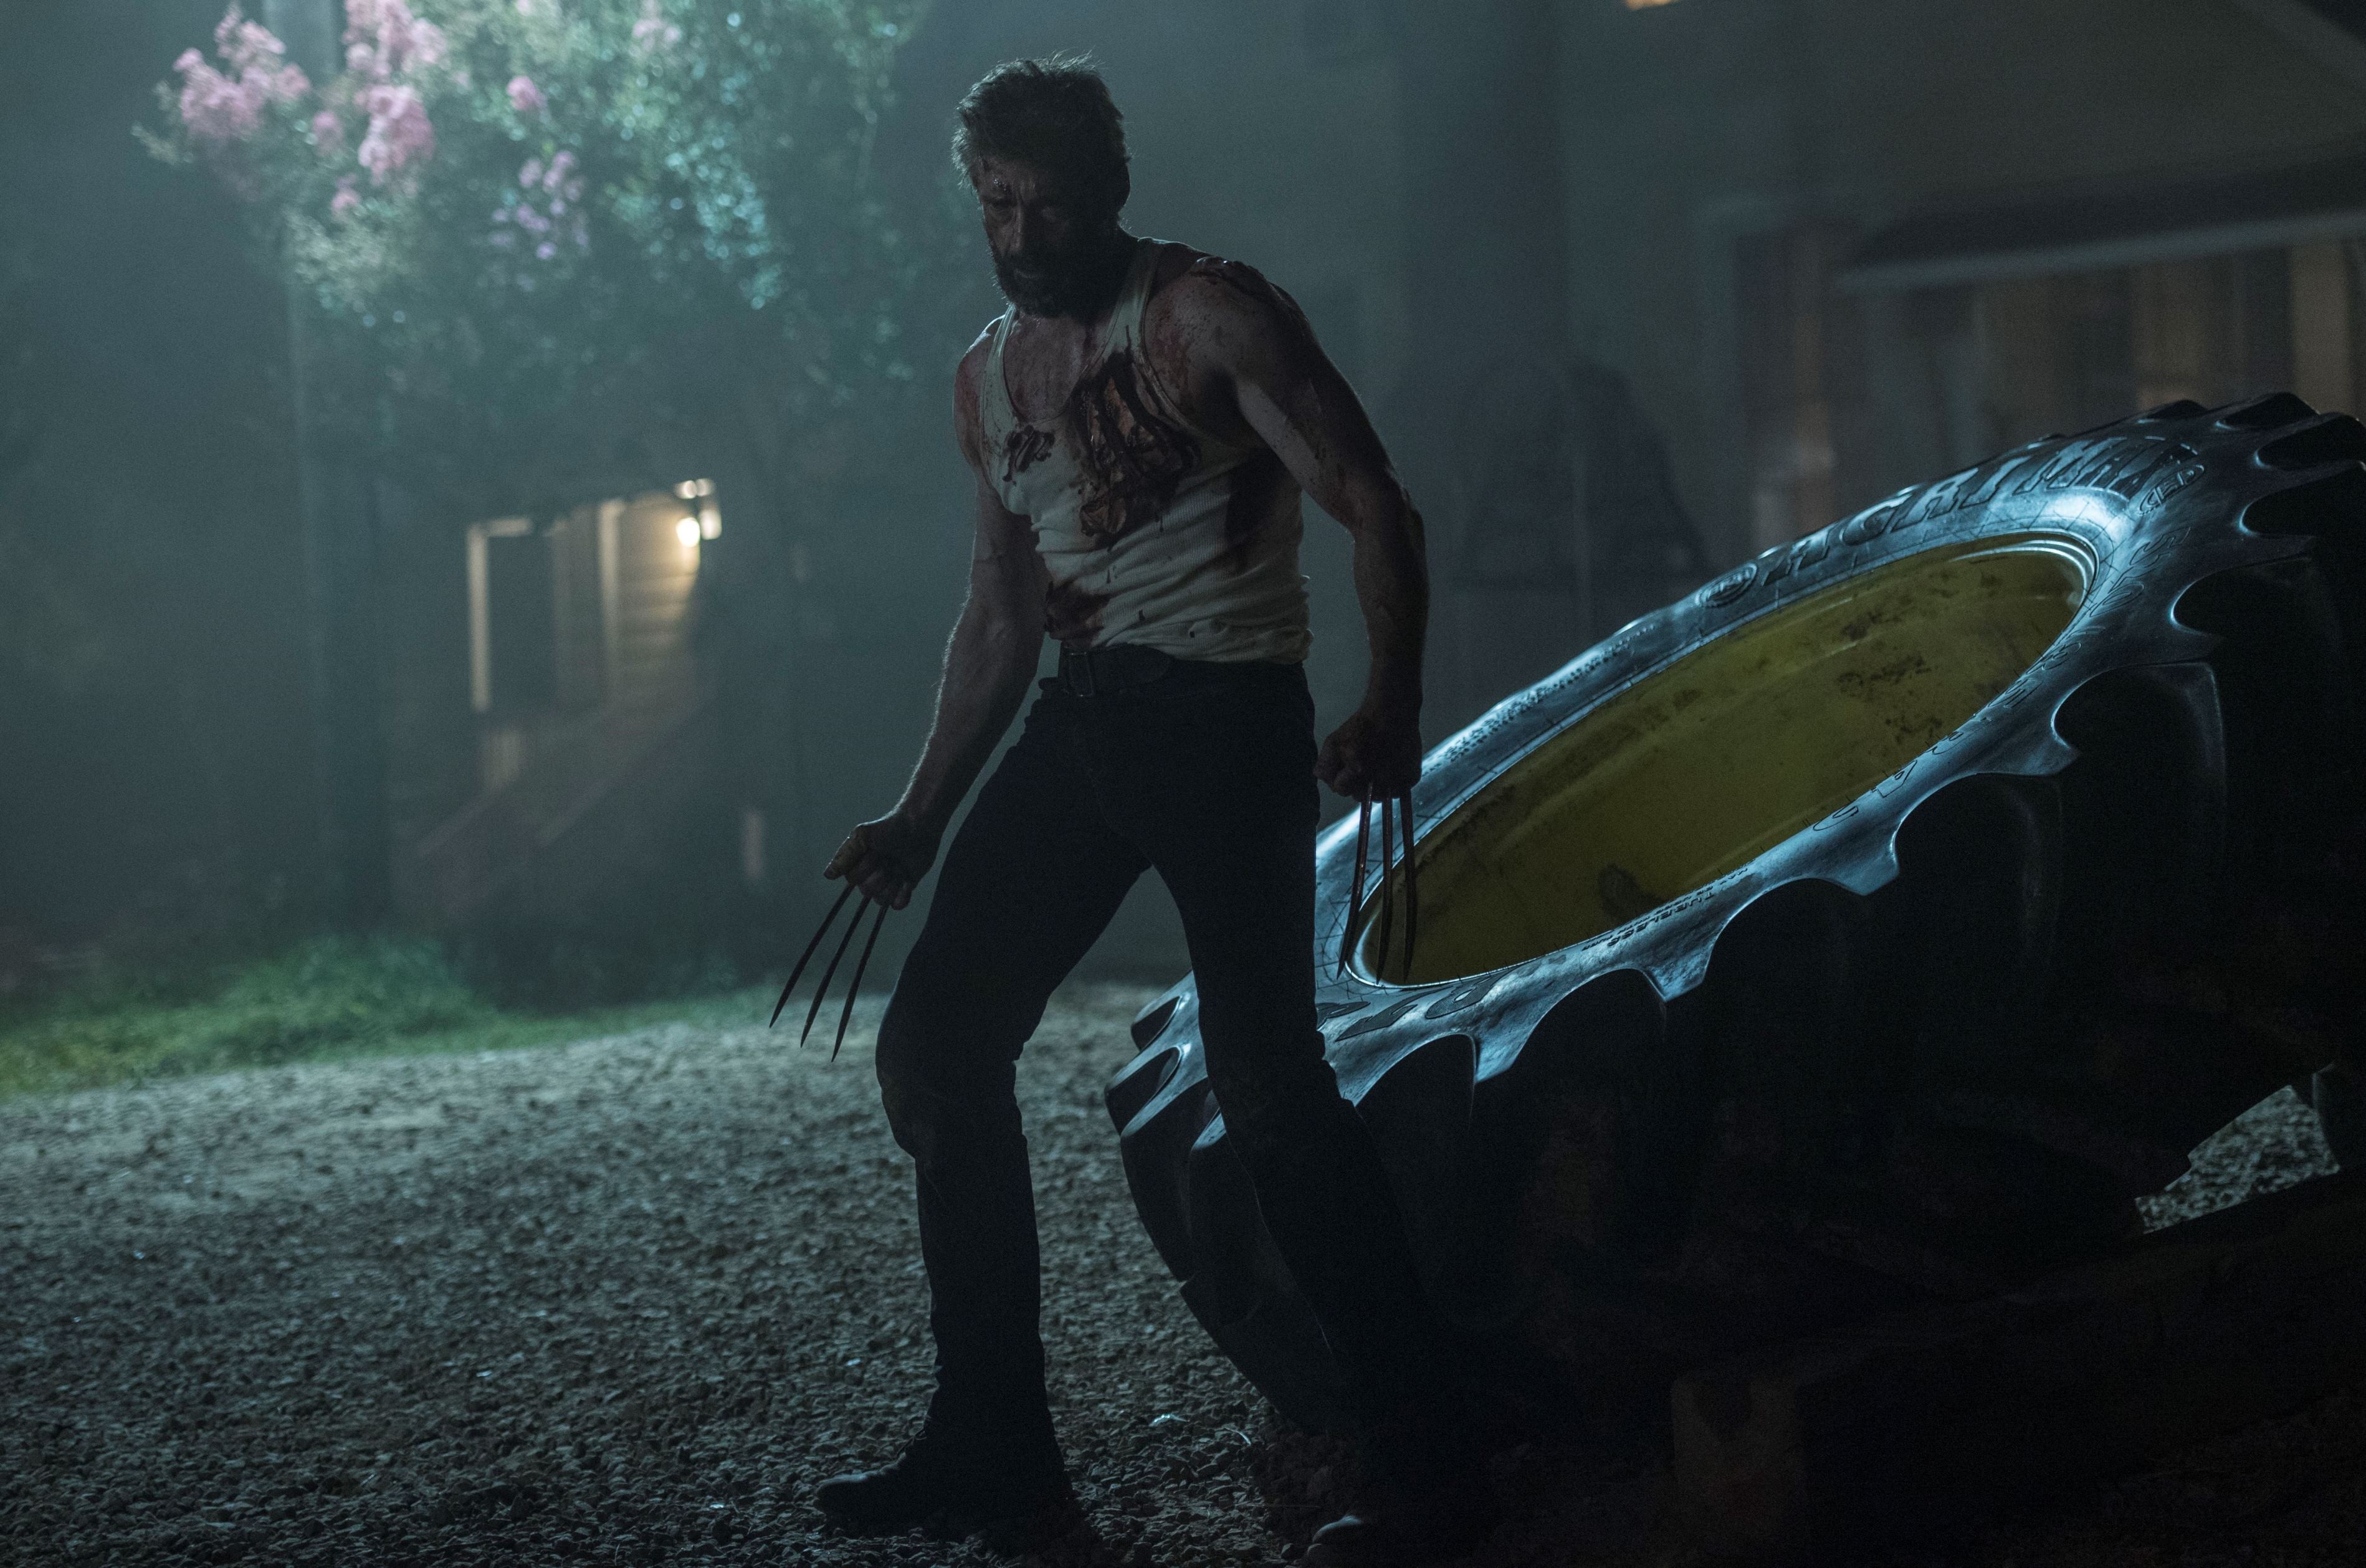 People 3797x2517 Logan (2017) Hugh Jackman blood claws injured Wolverine movies actor men bruise